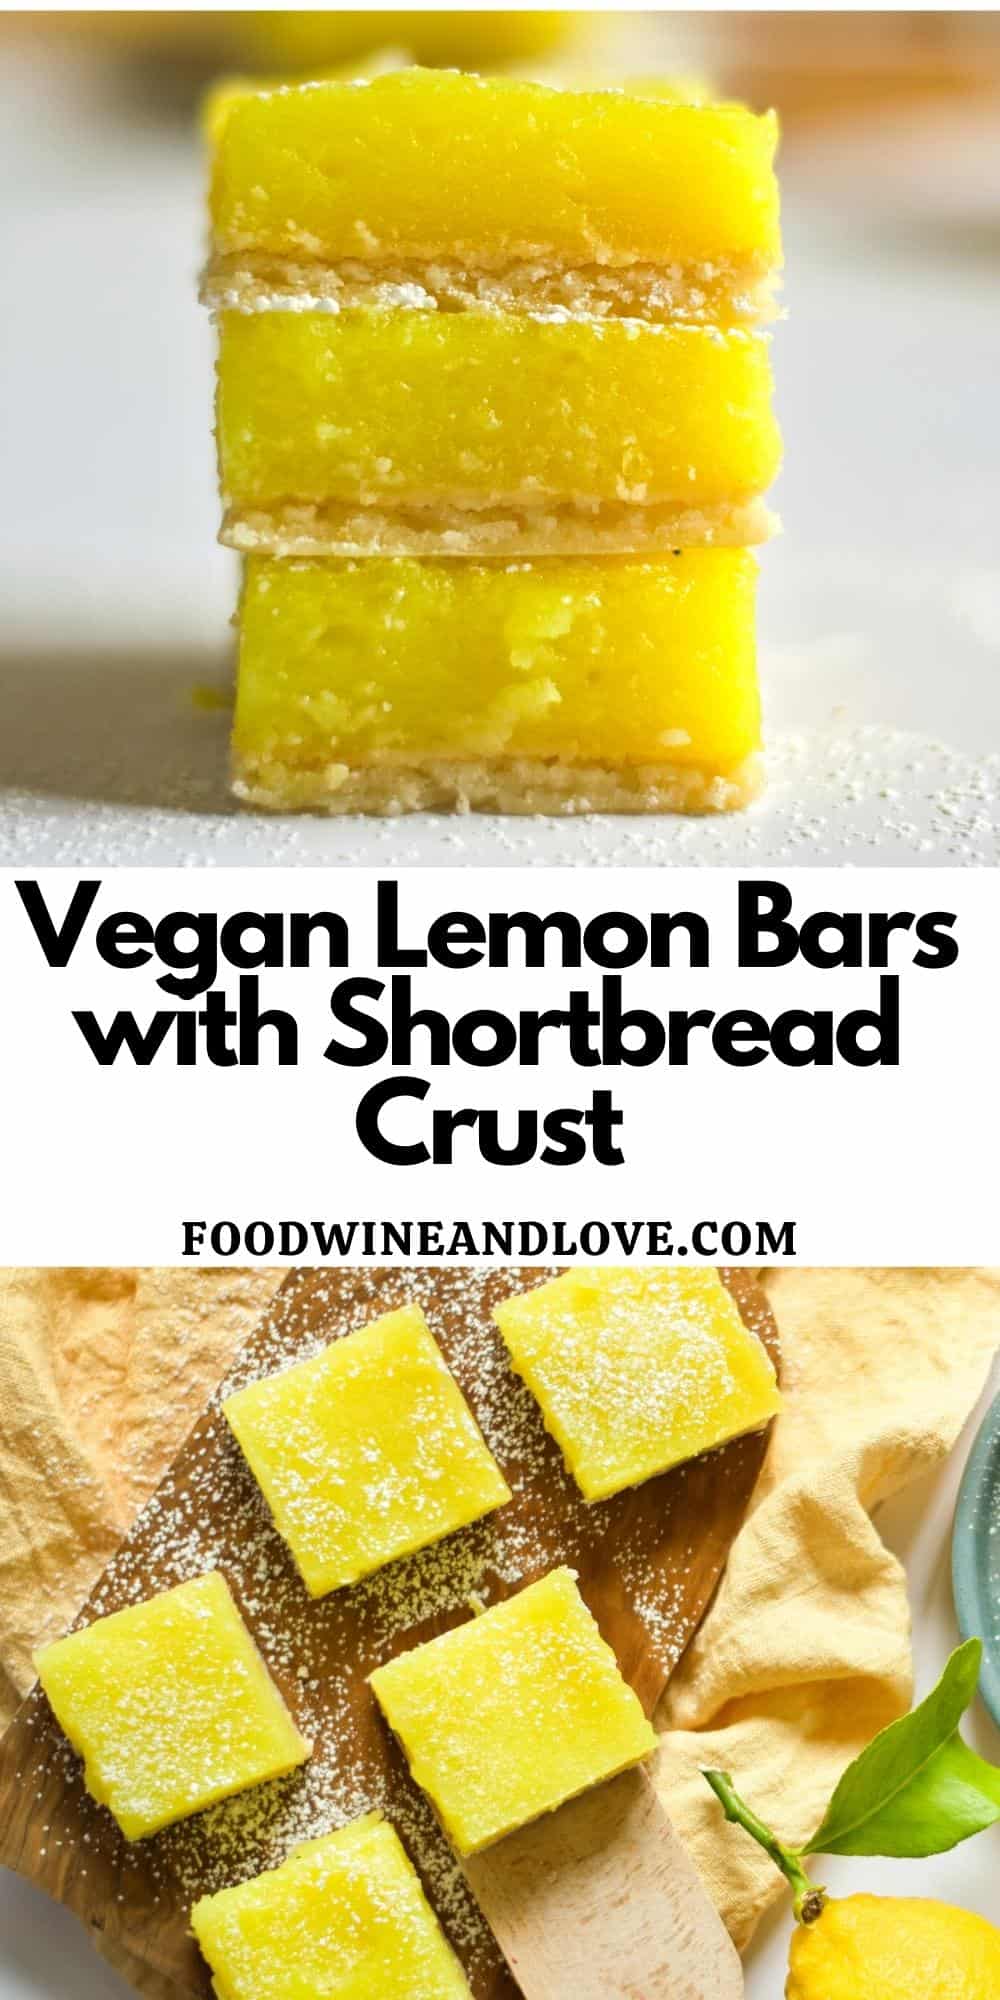 Vegan Lemon Bars with Shortbread Crust